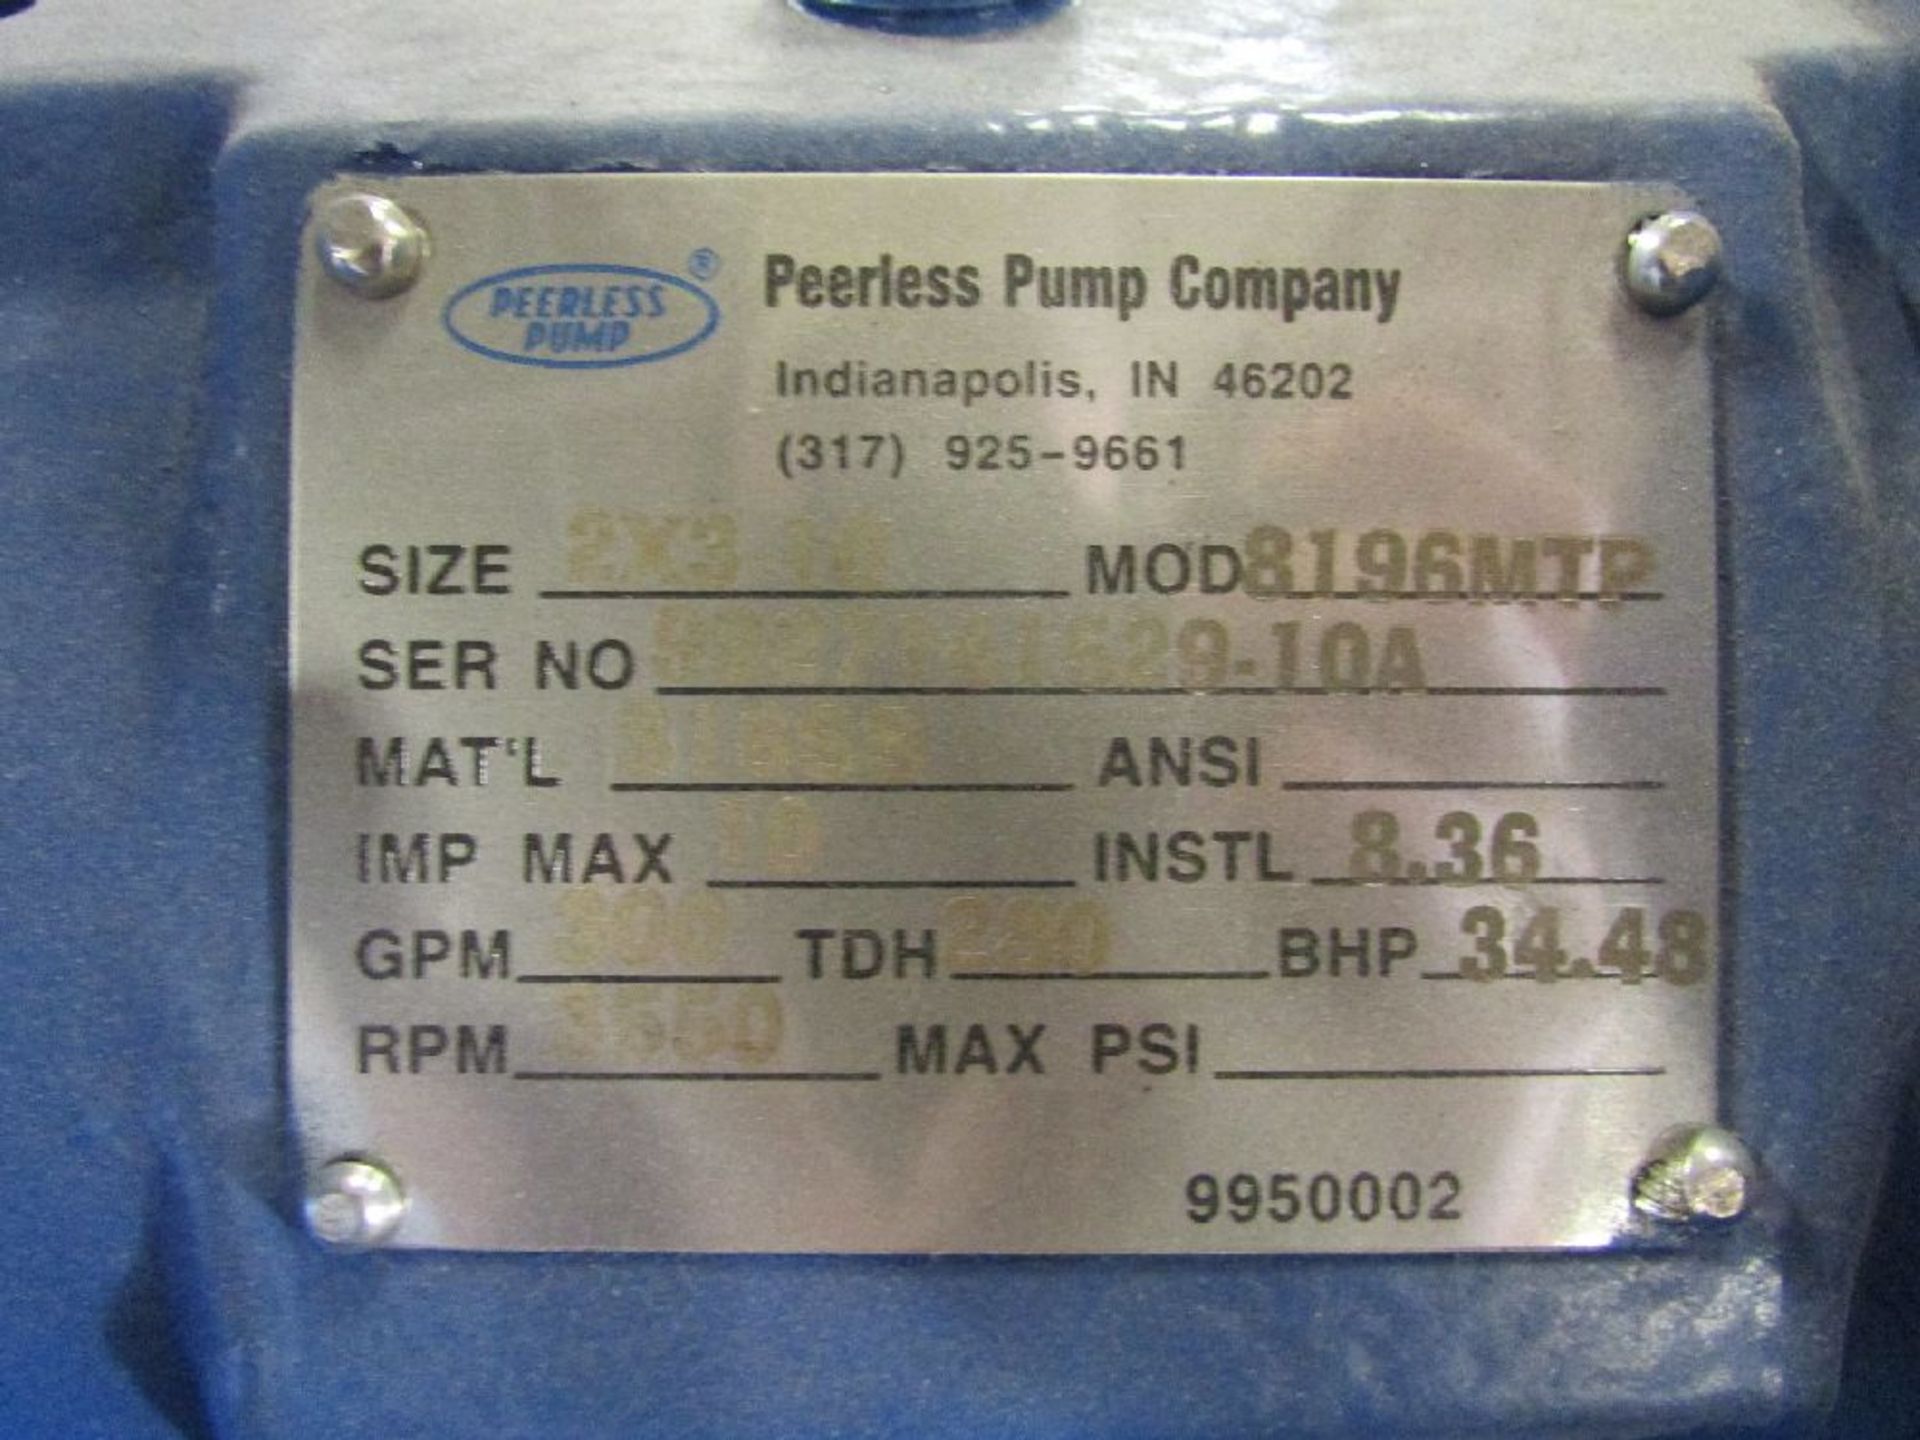 Peerless Pump Co Model 8196MTP 2x3-10 Centrifugal Pump - Image 5 of 5